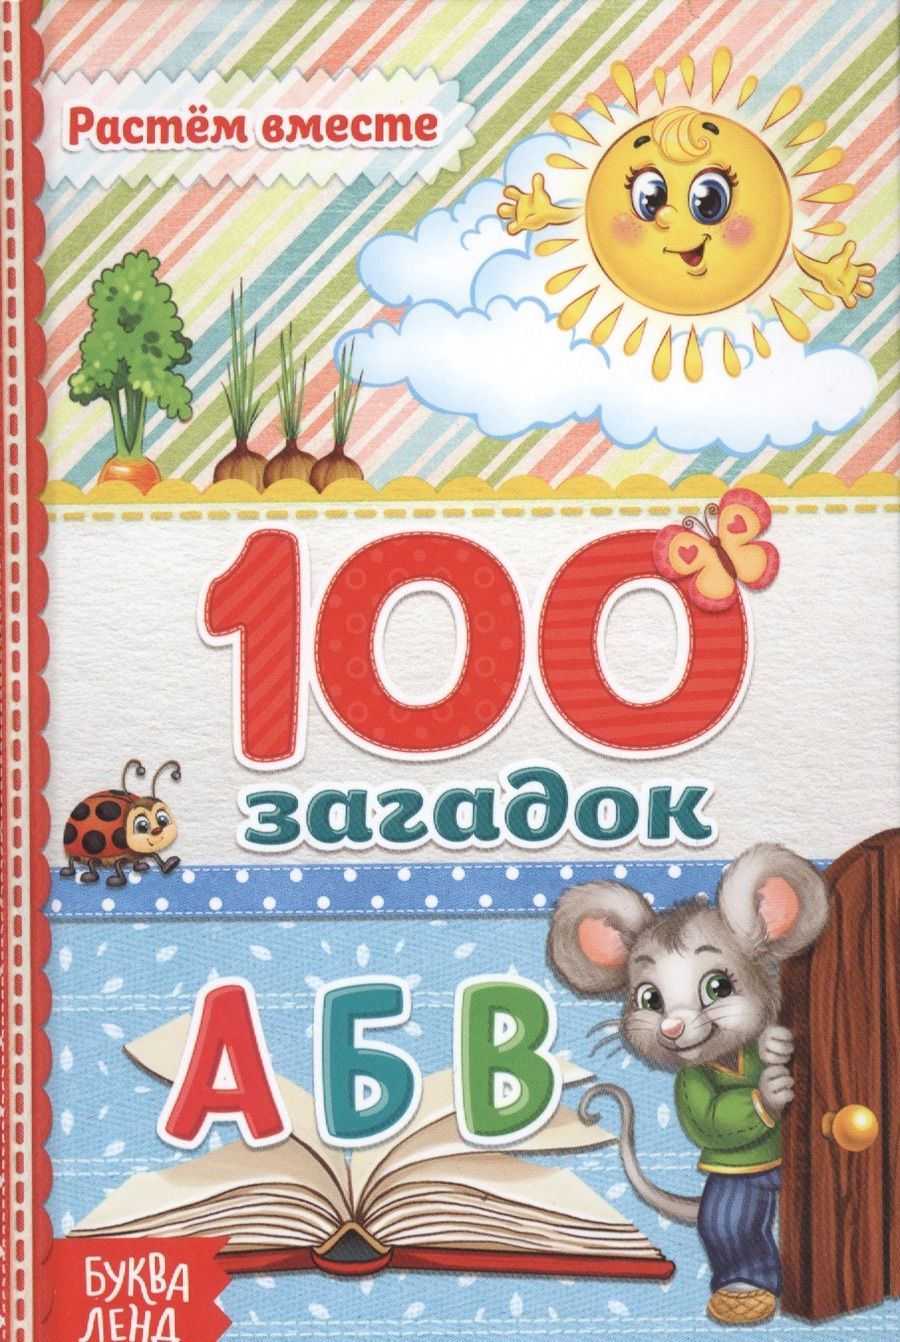 Обложка книги "100 загадок"